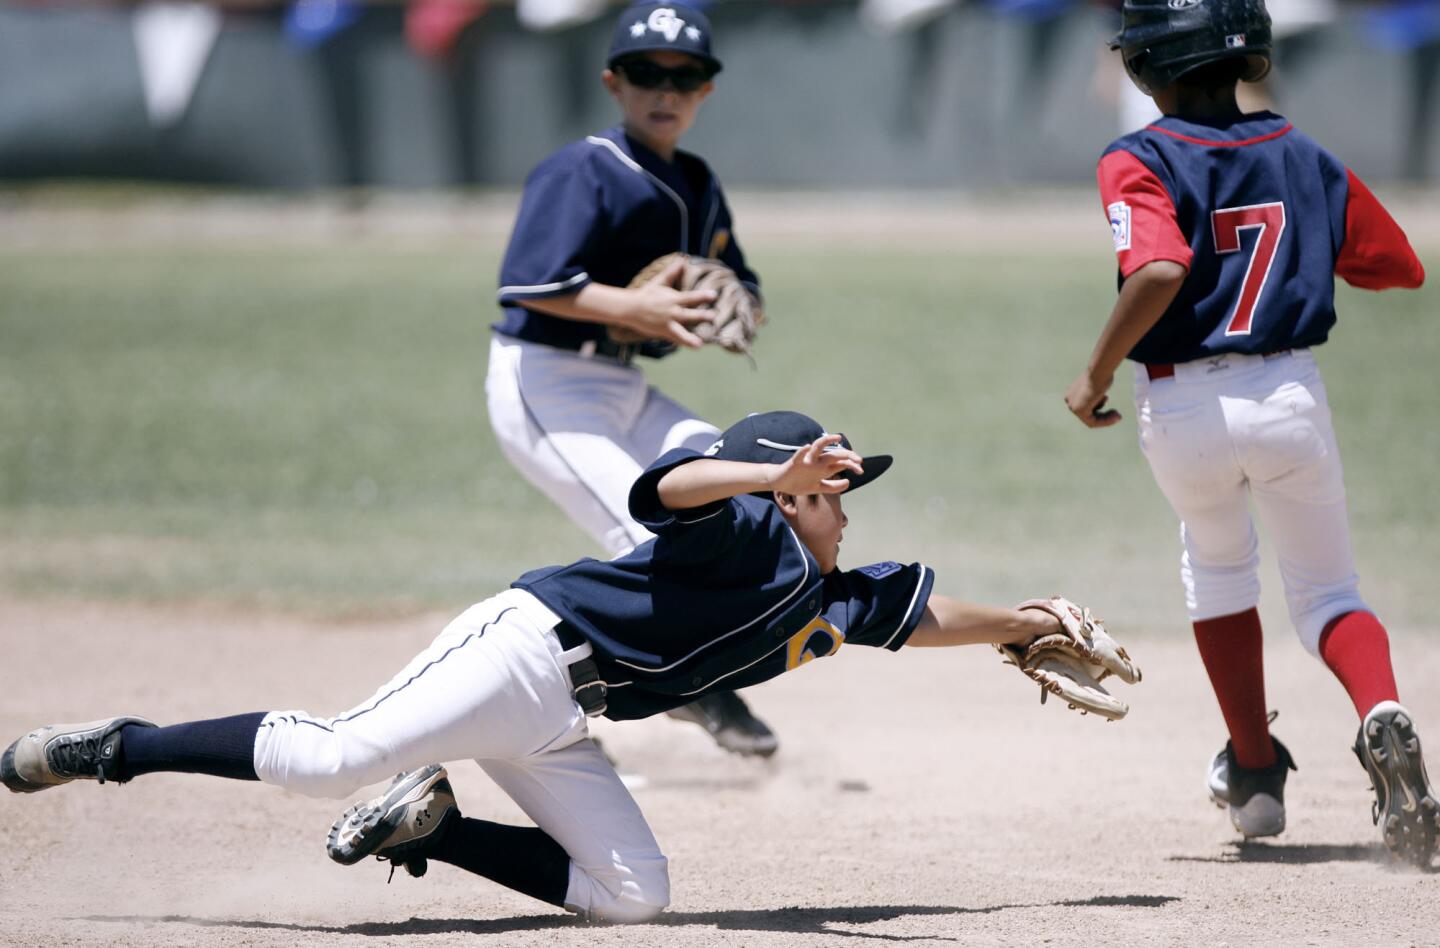 Photo Gallery: Burbank All Stars vs. Crescenta Valley All Stars baseball